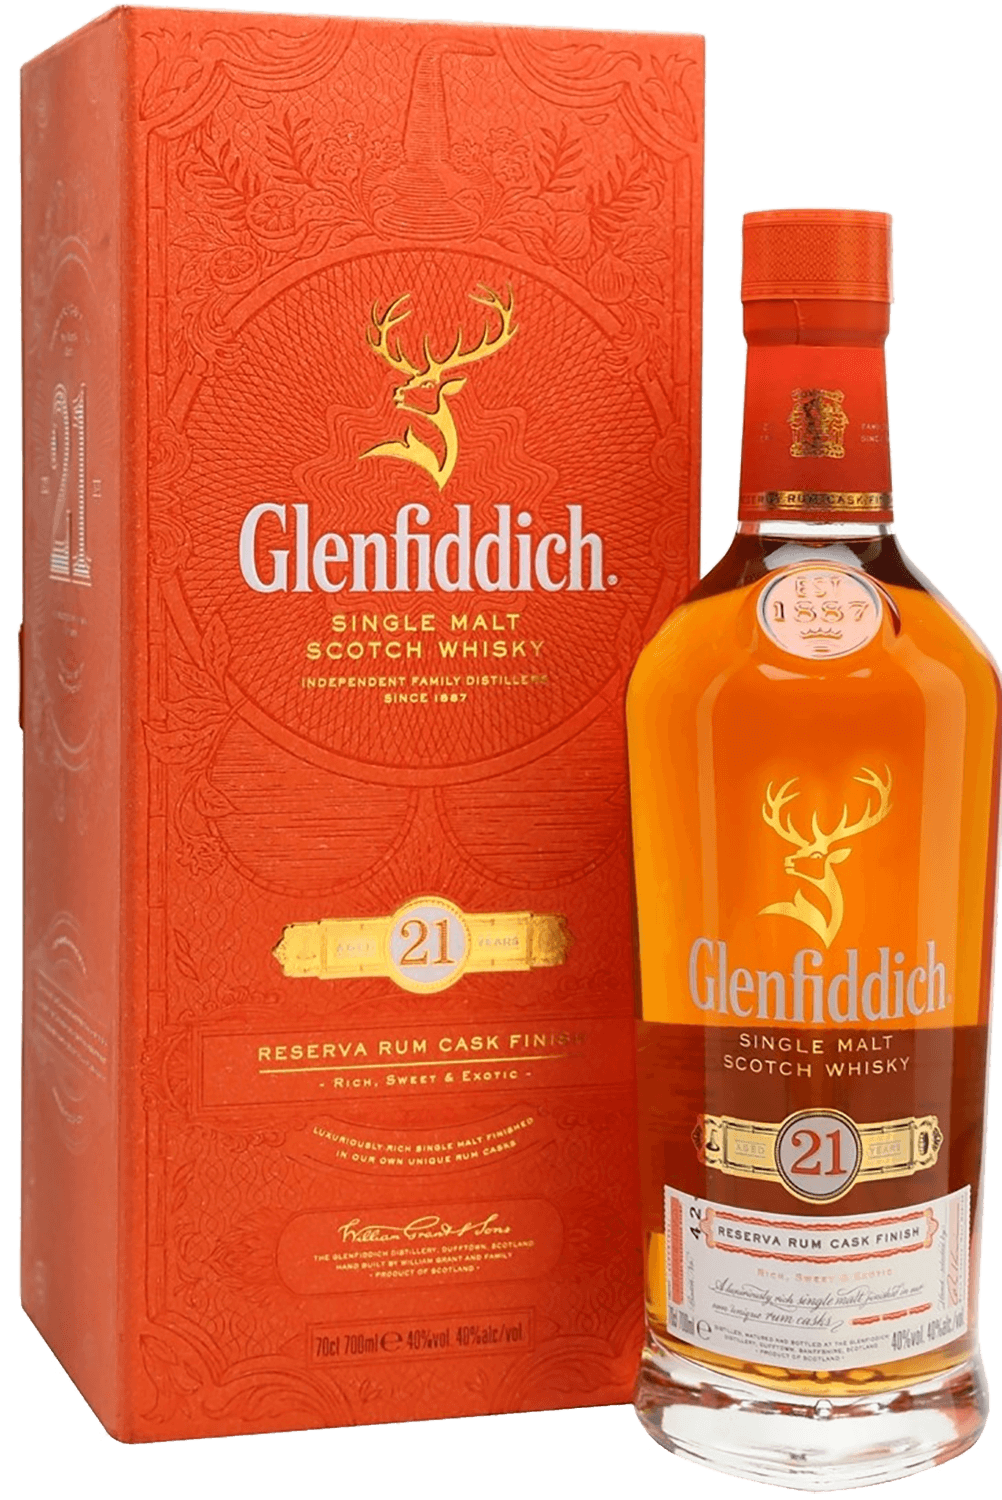 Glenfiddich Single Malt Scotch Whisky 21 yo (gift box) glenfiddich 18 years old single malt scotch whisky gift box